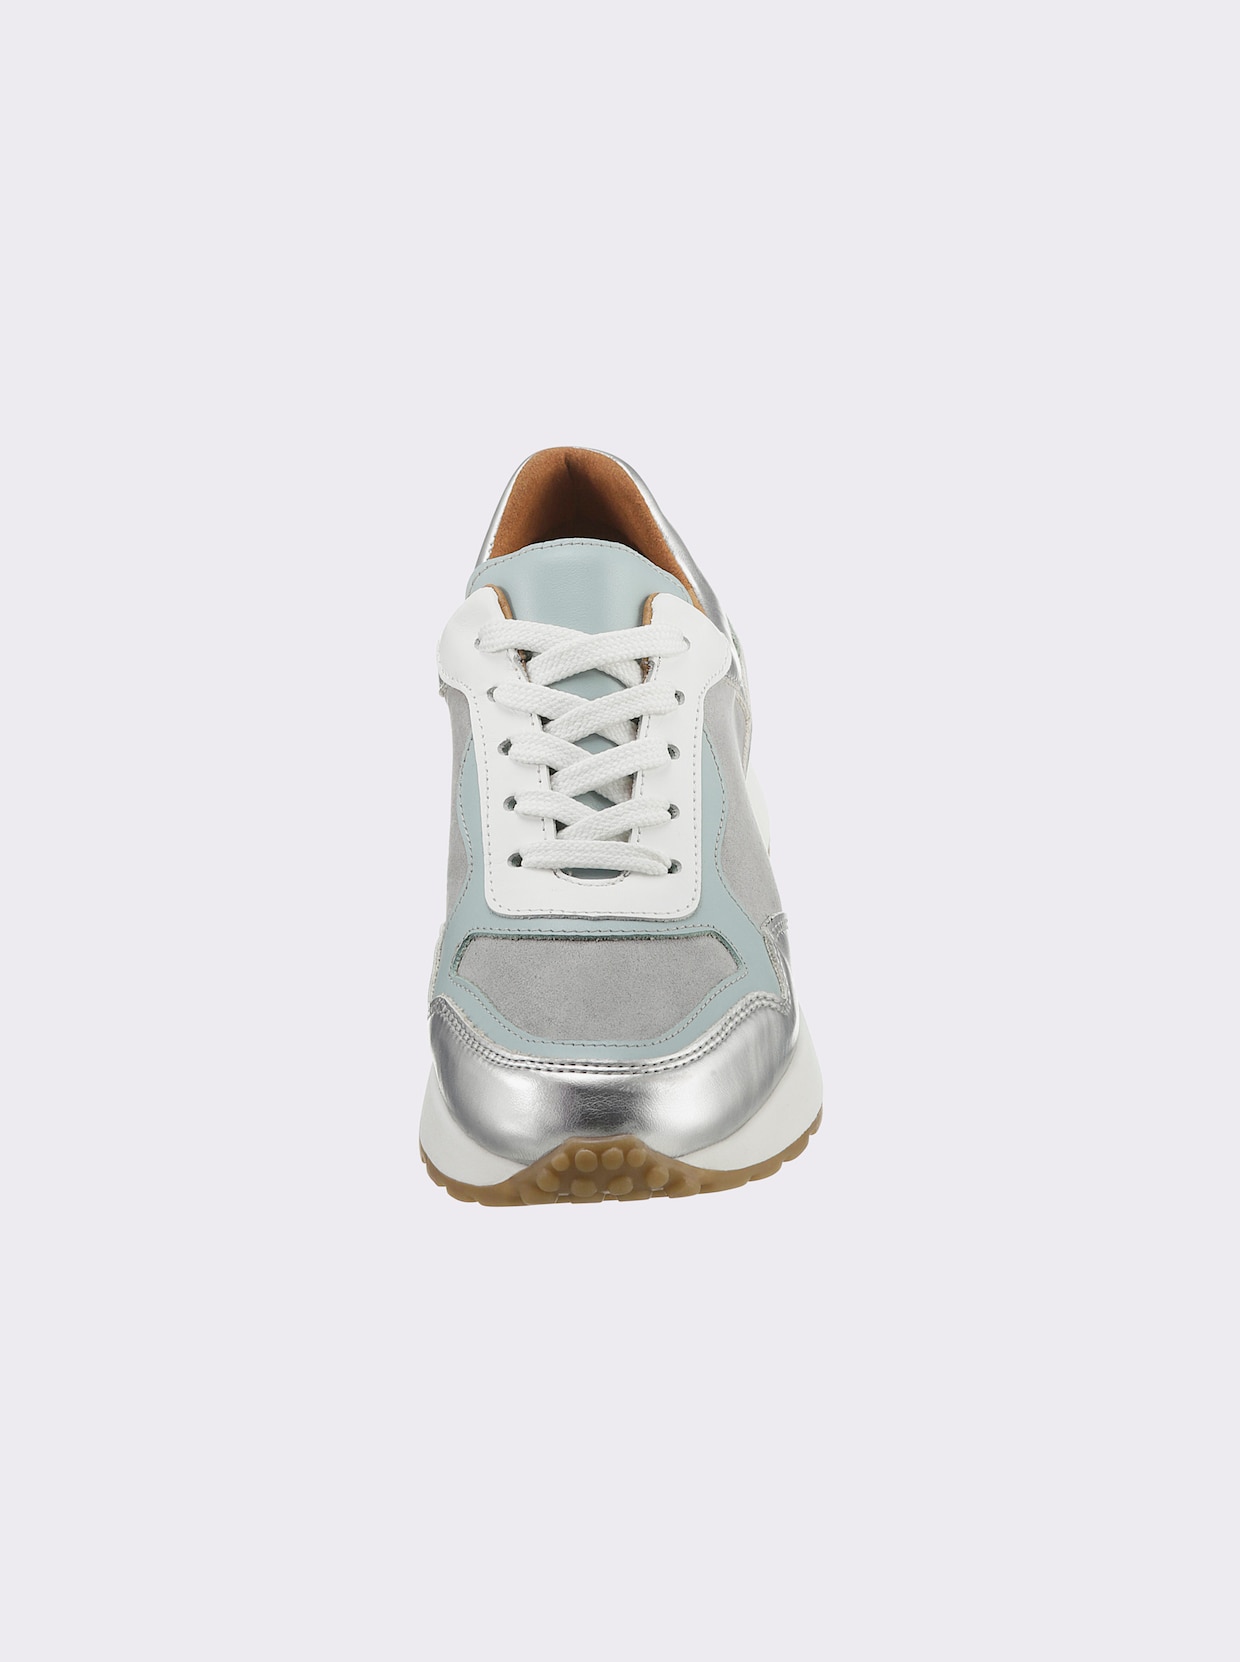 heine Sneaker - grau-silberfarben